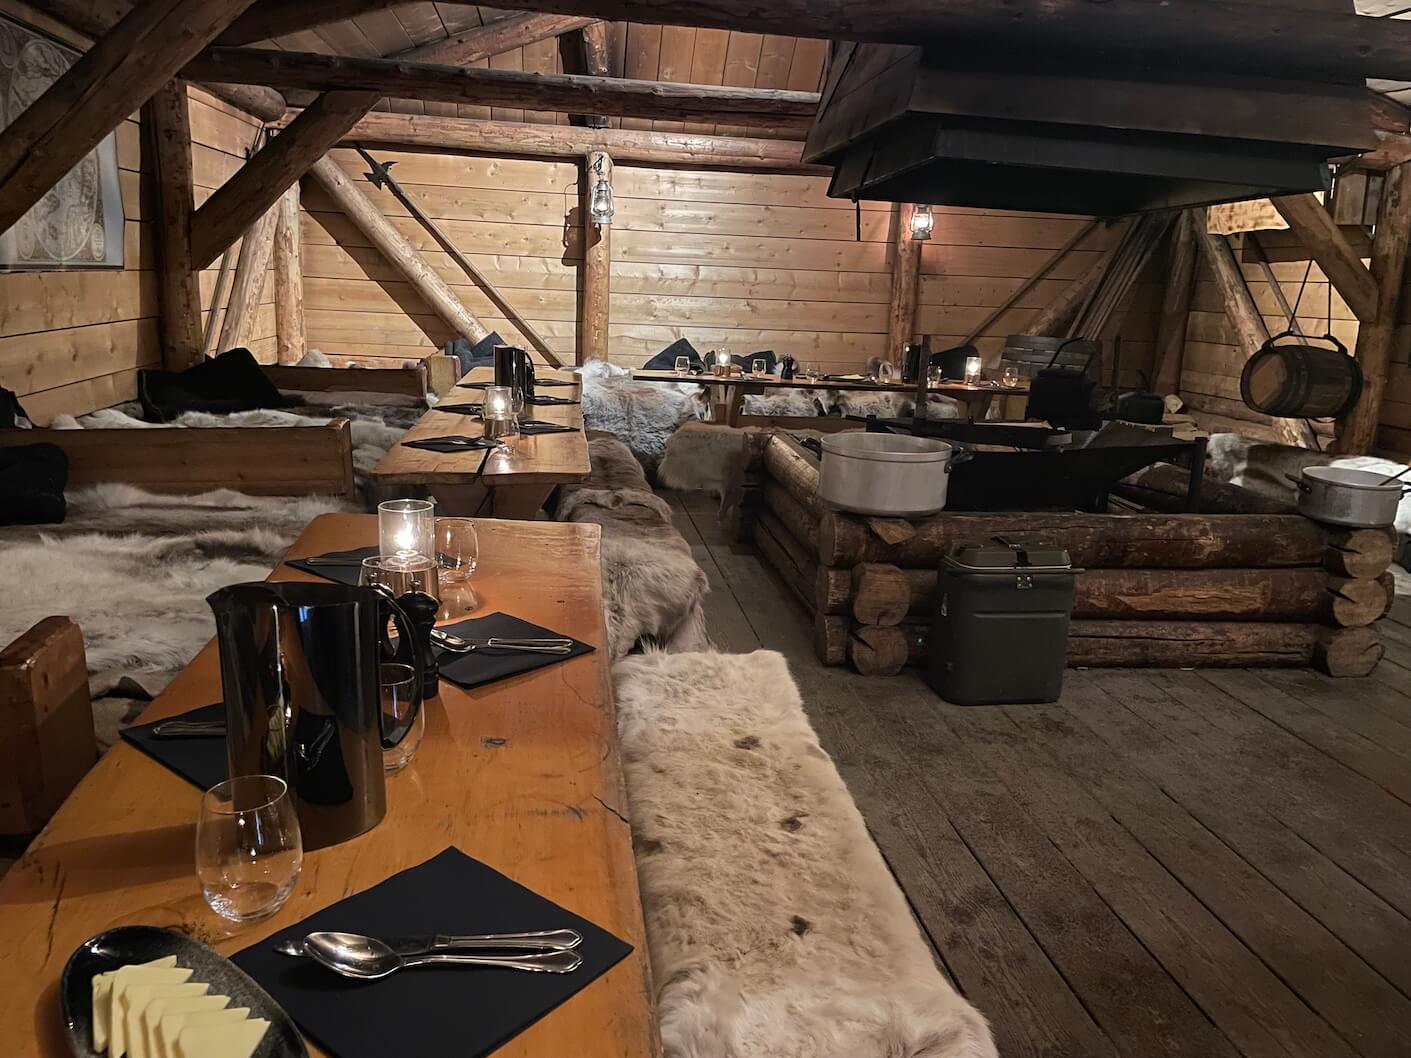 Camp Barentz has a replica of Dutch explorer Willem Barentz's cabin 